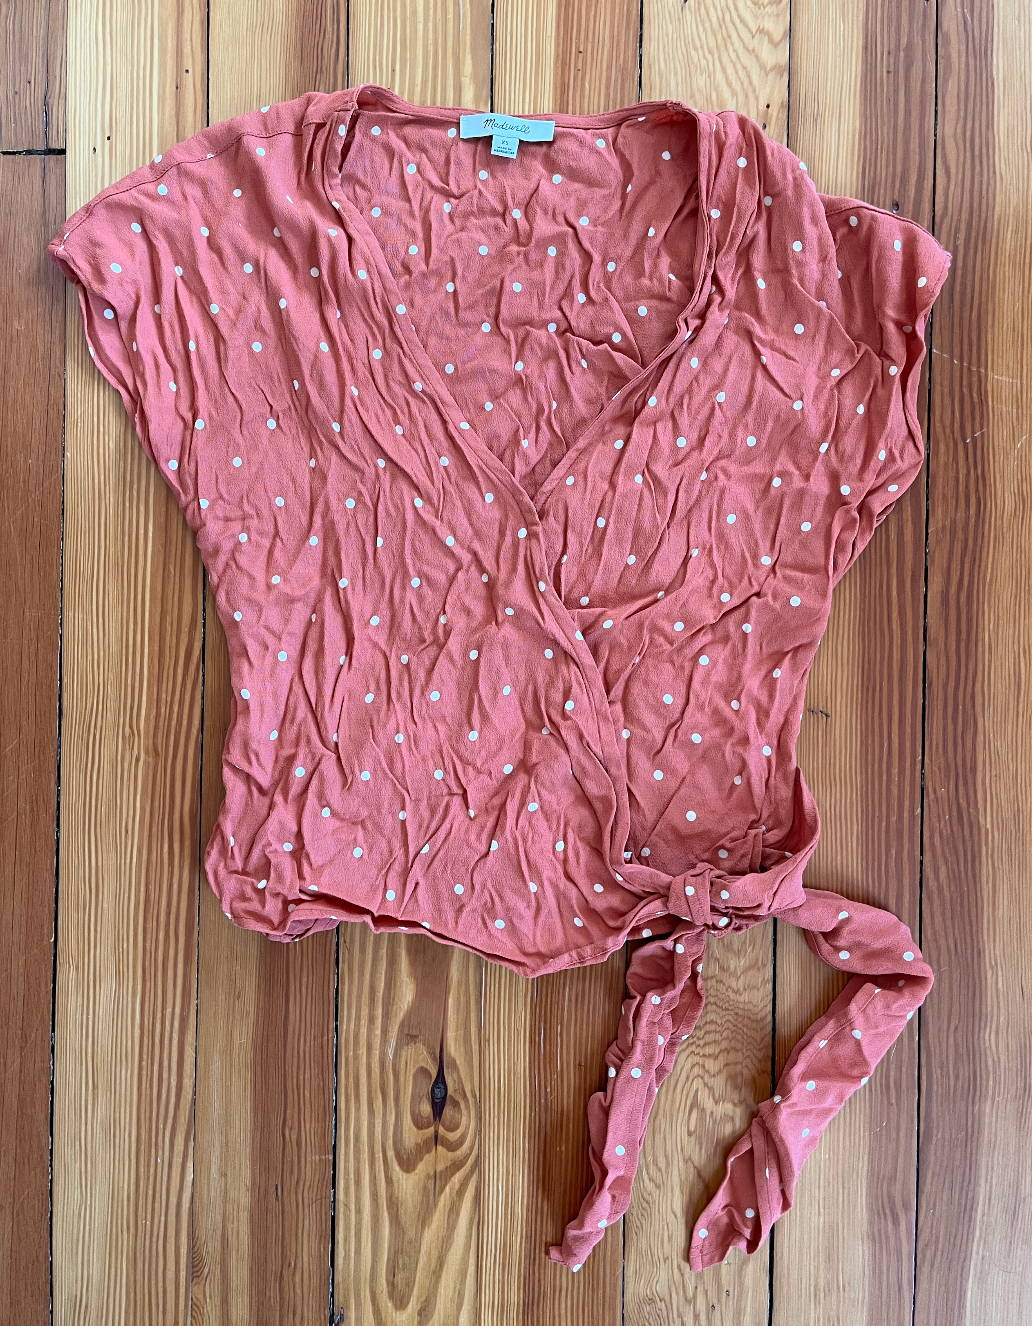 Madewell Polkadot Wrap Shirt - Size XS - Coral with Cream Dots - EUC